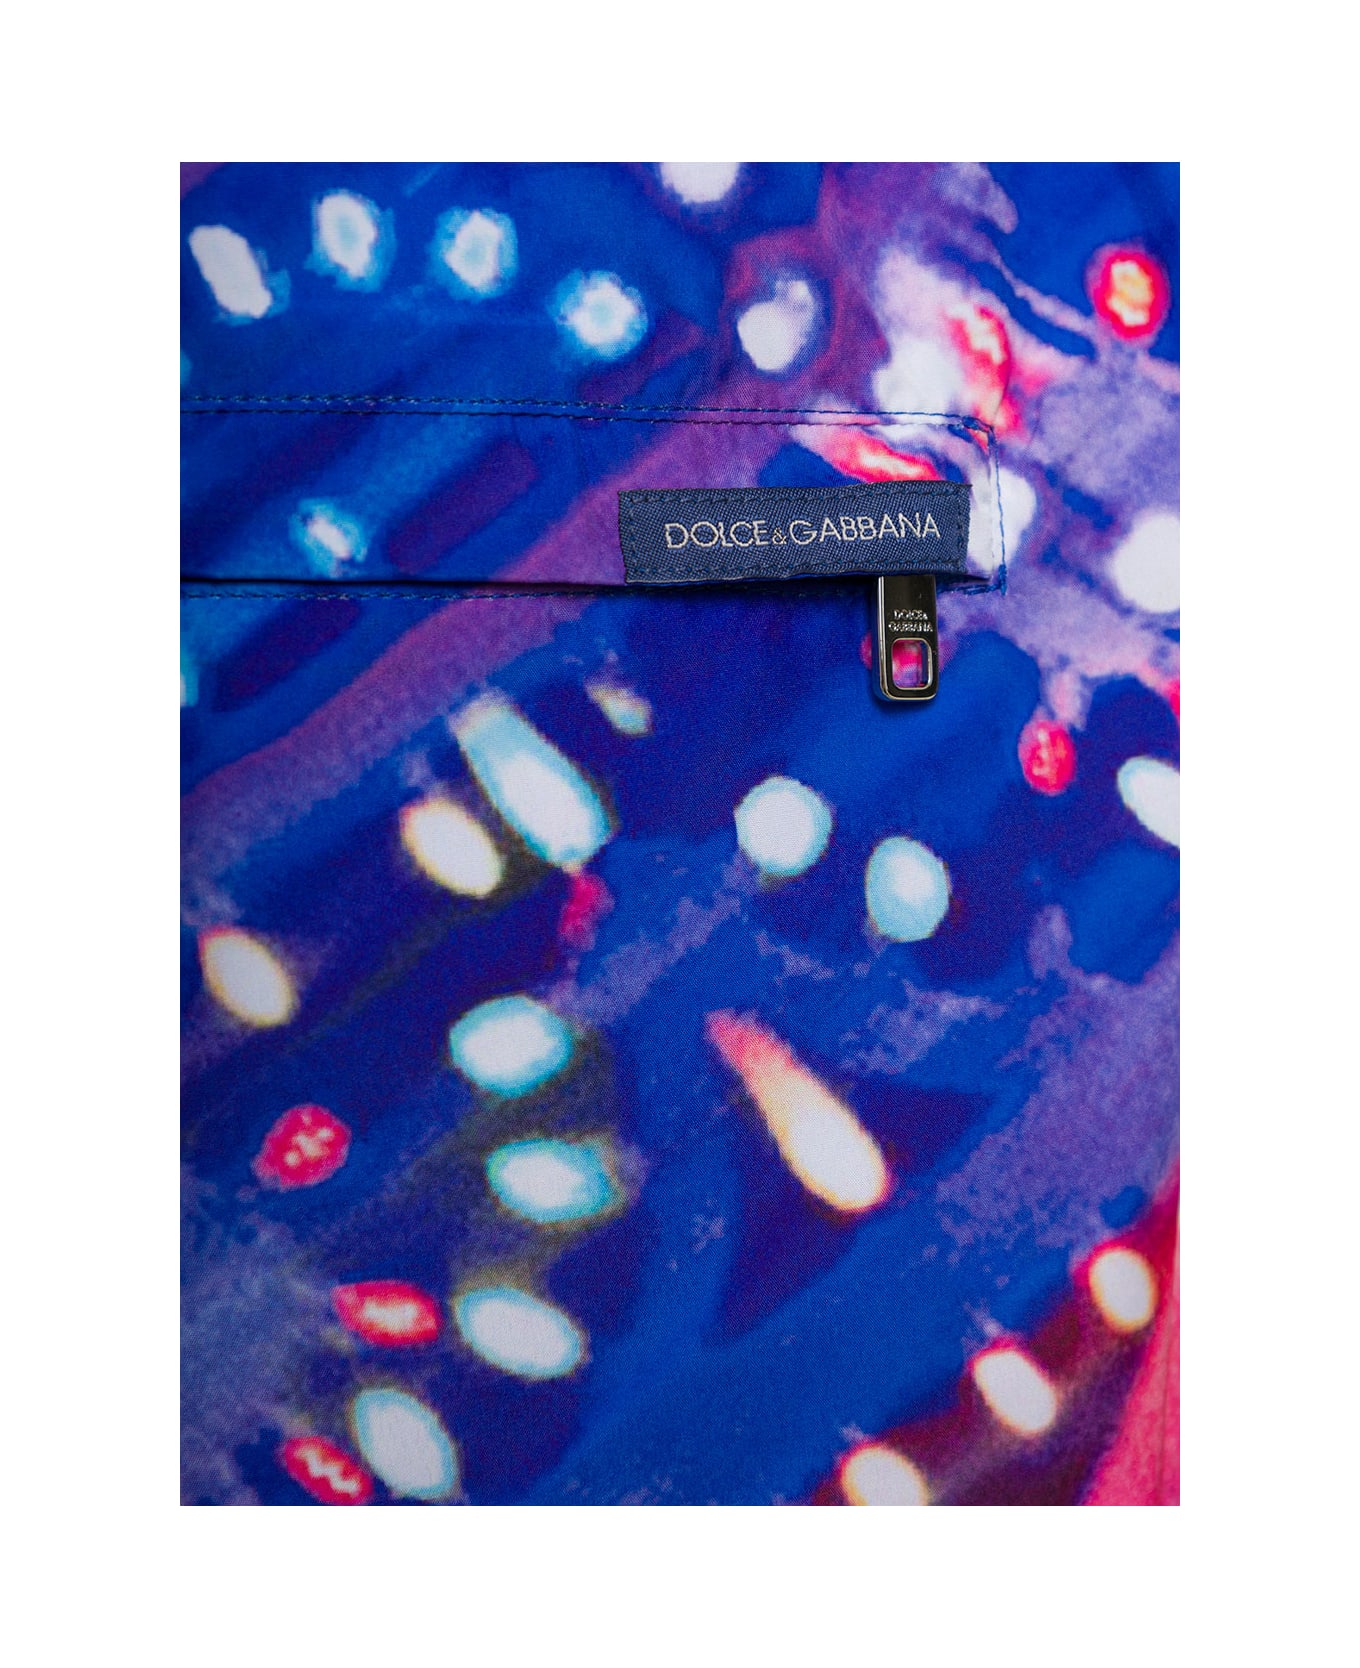 Dolce & Gabbana Man's Nylon Luminarie dolce gabbana panelled button fastening vest item - Multicolor